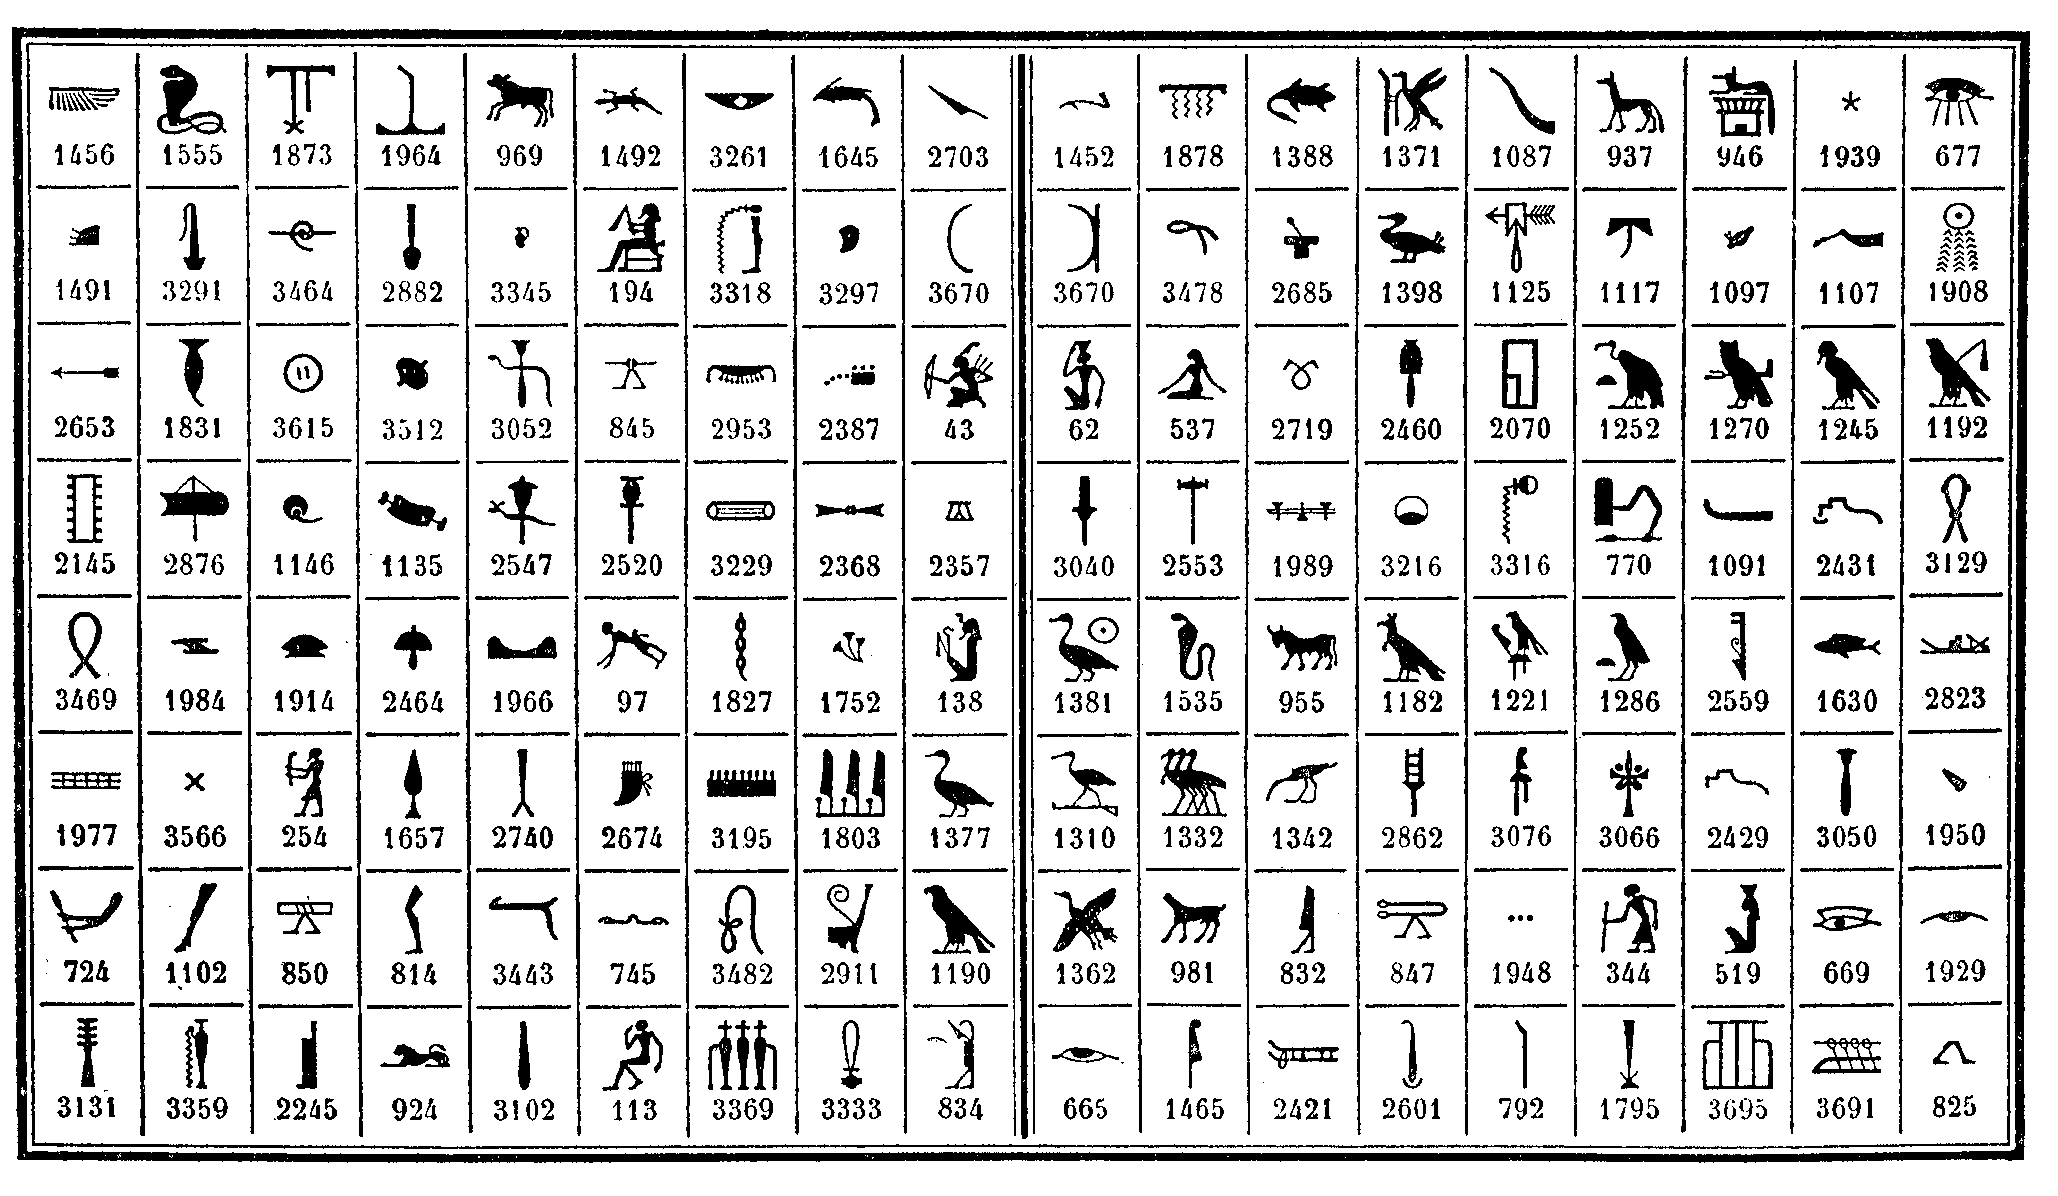 hieroglyph lay, second portion